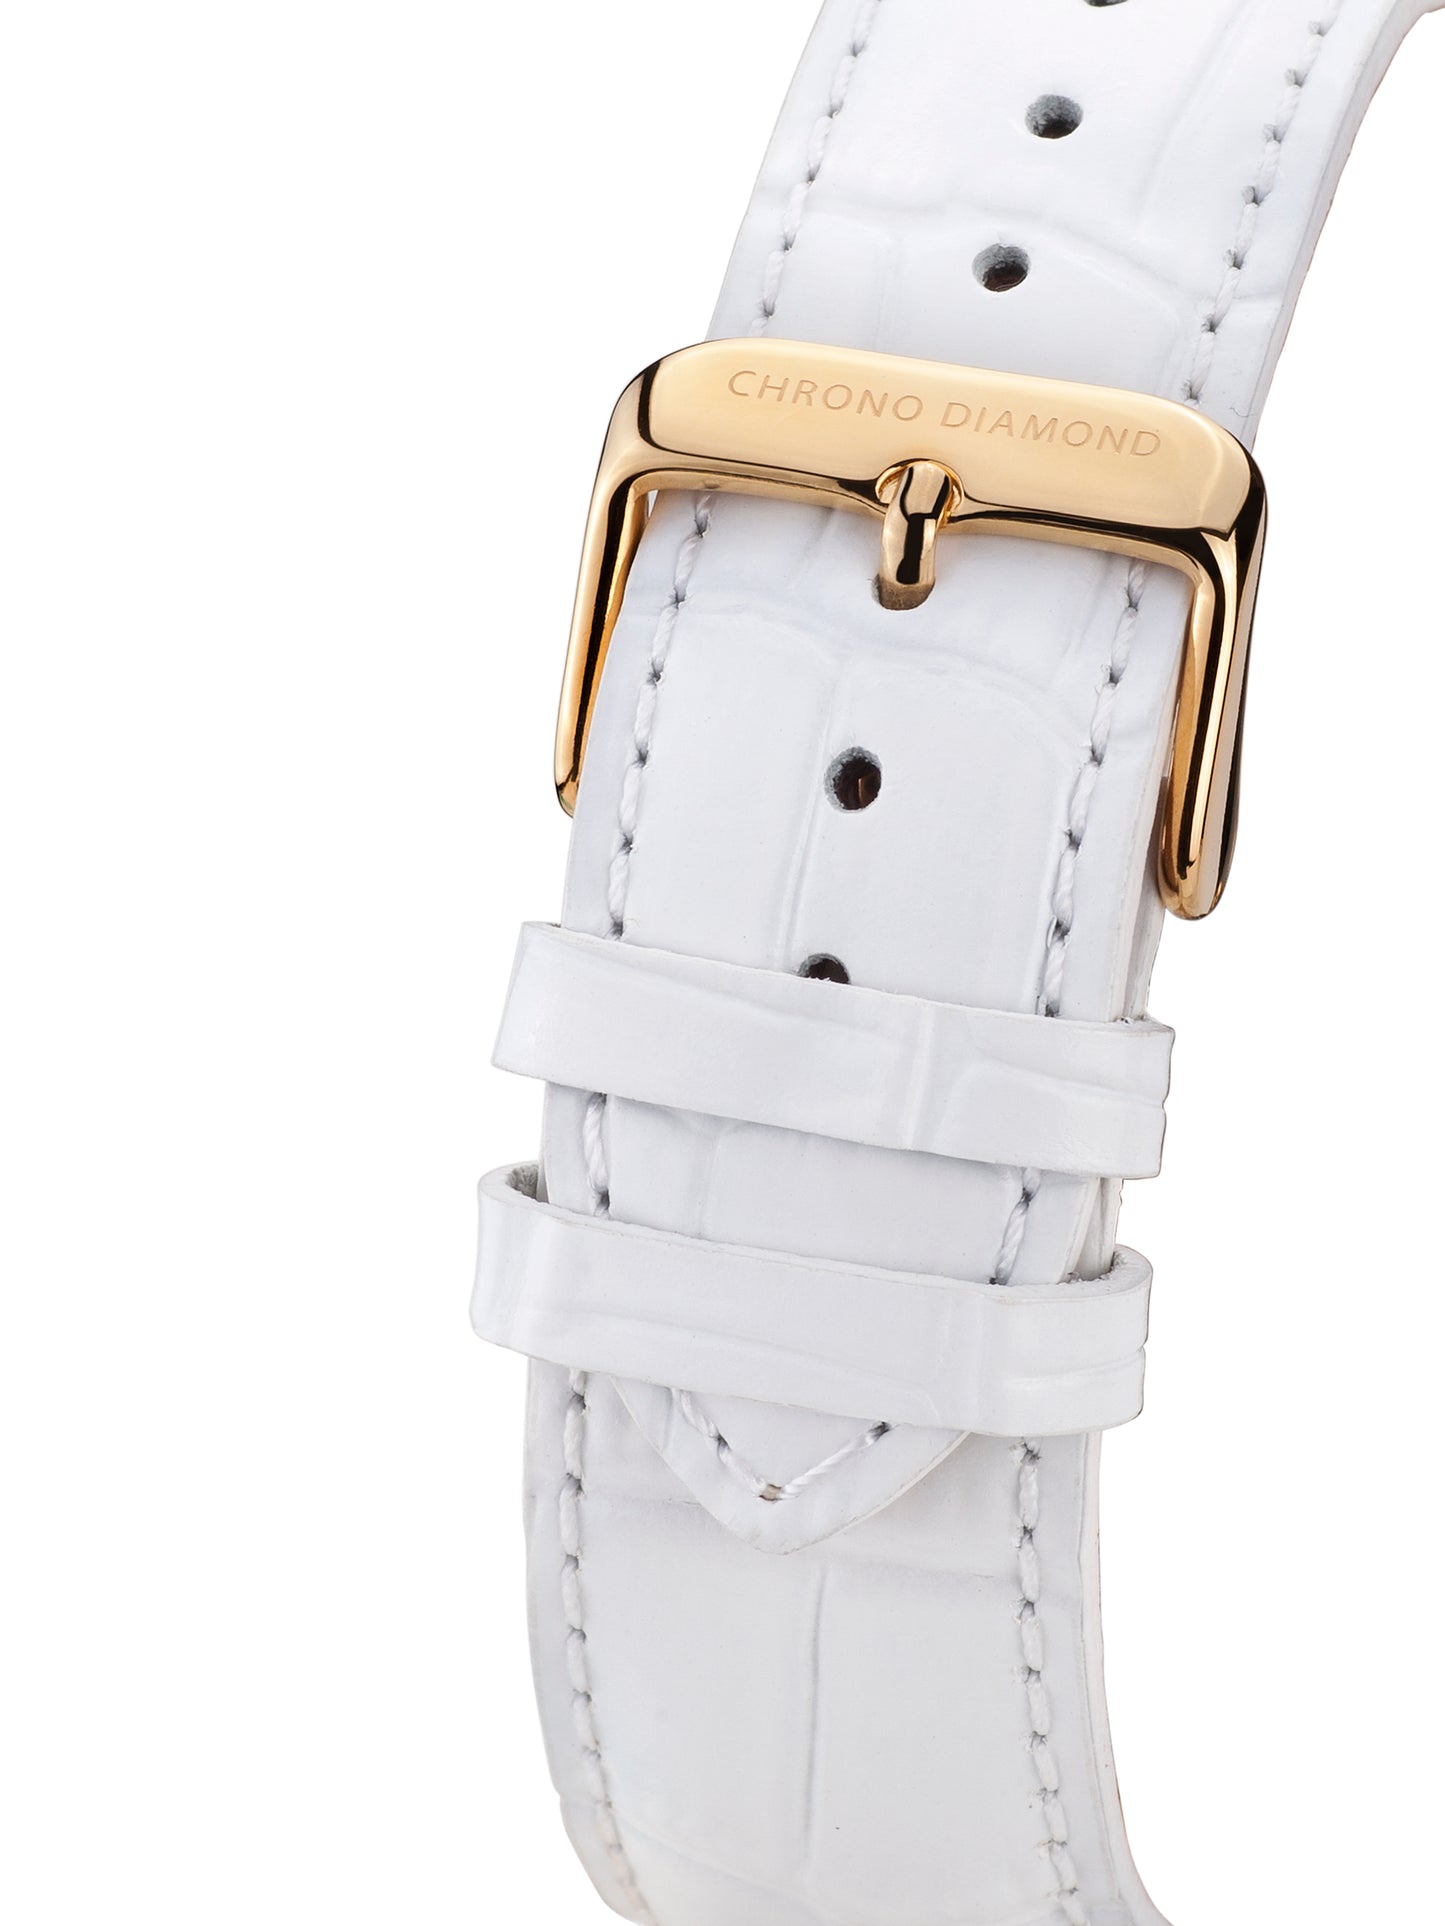 bracelet watches — leather band Argos — Band — white gold